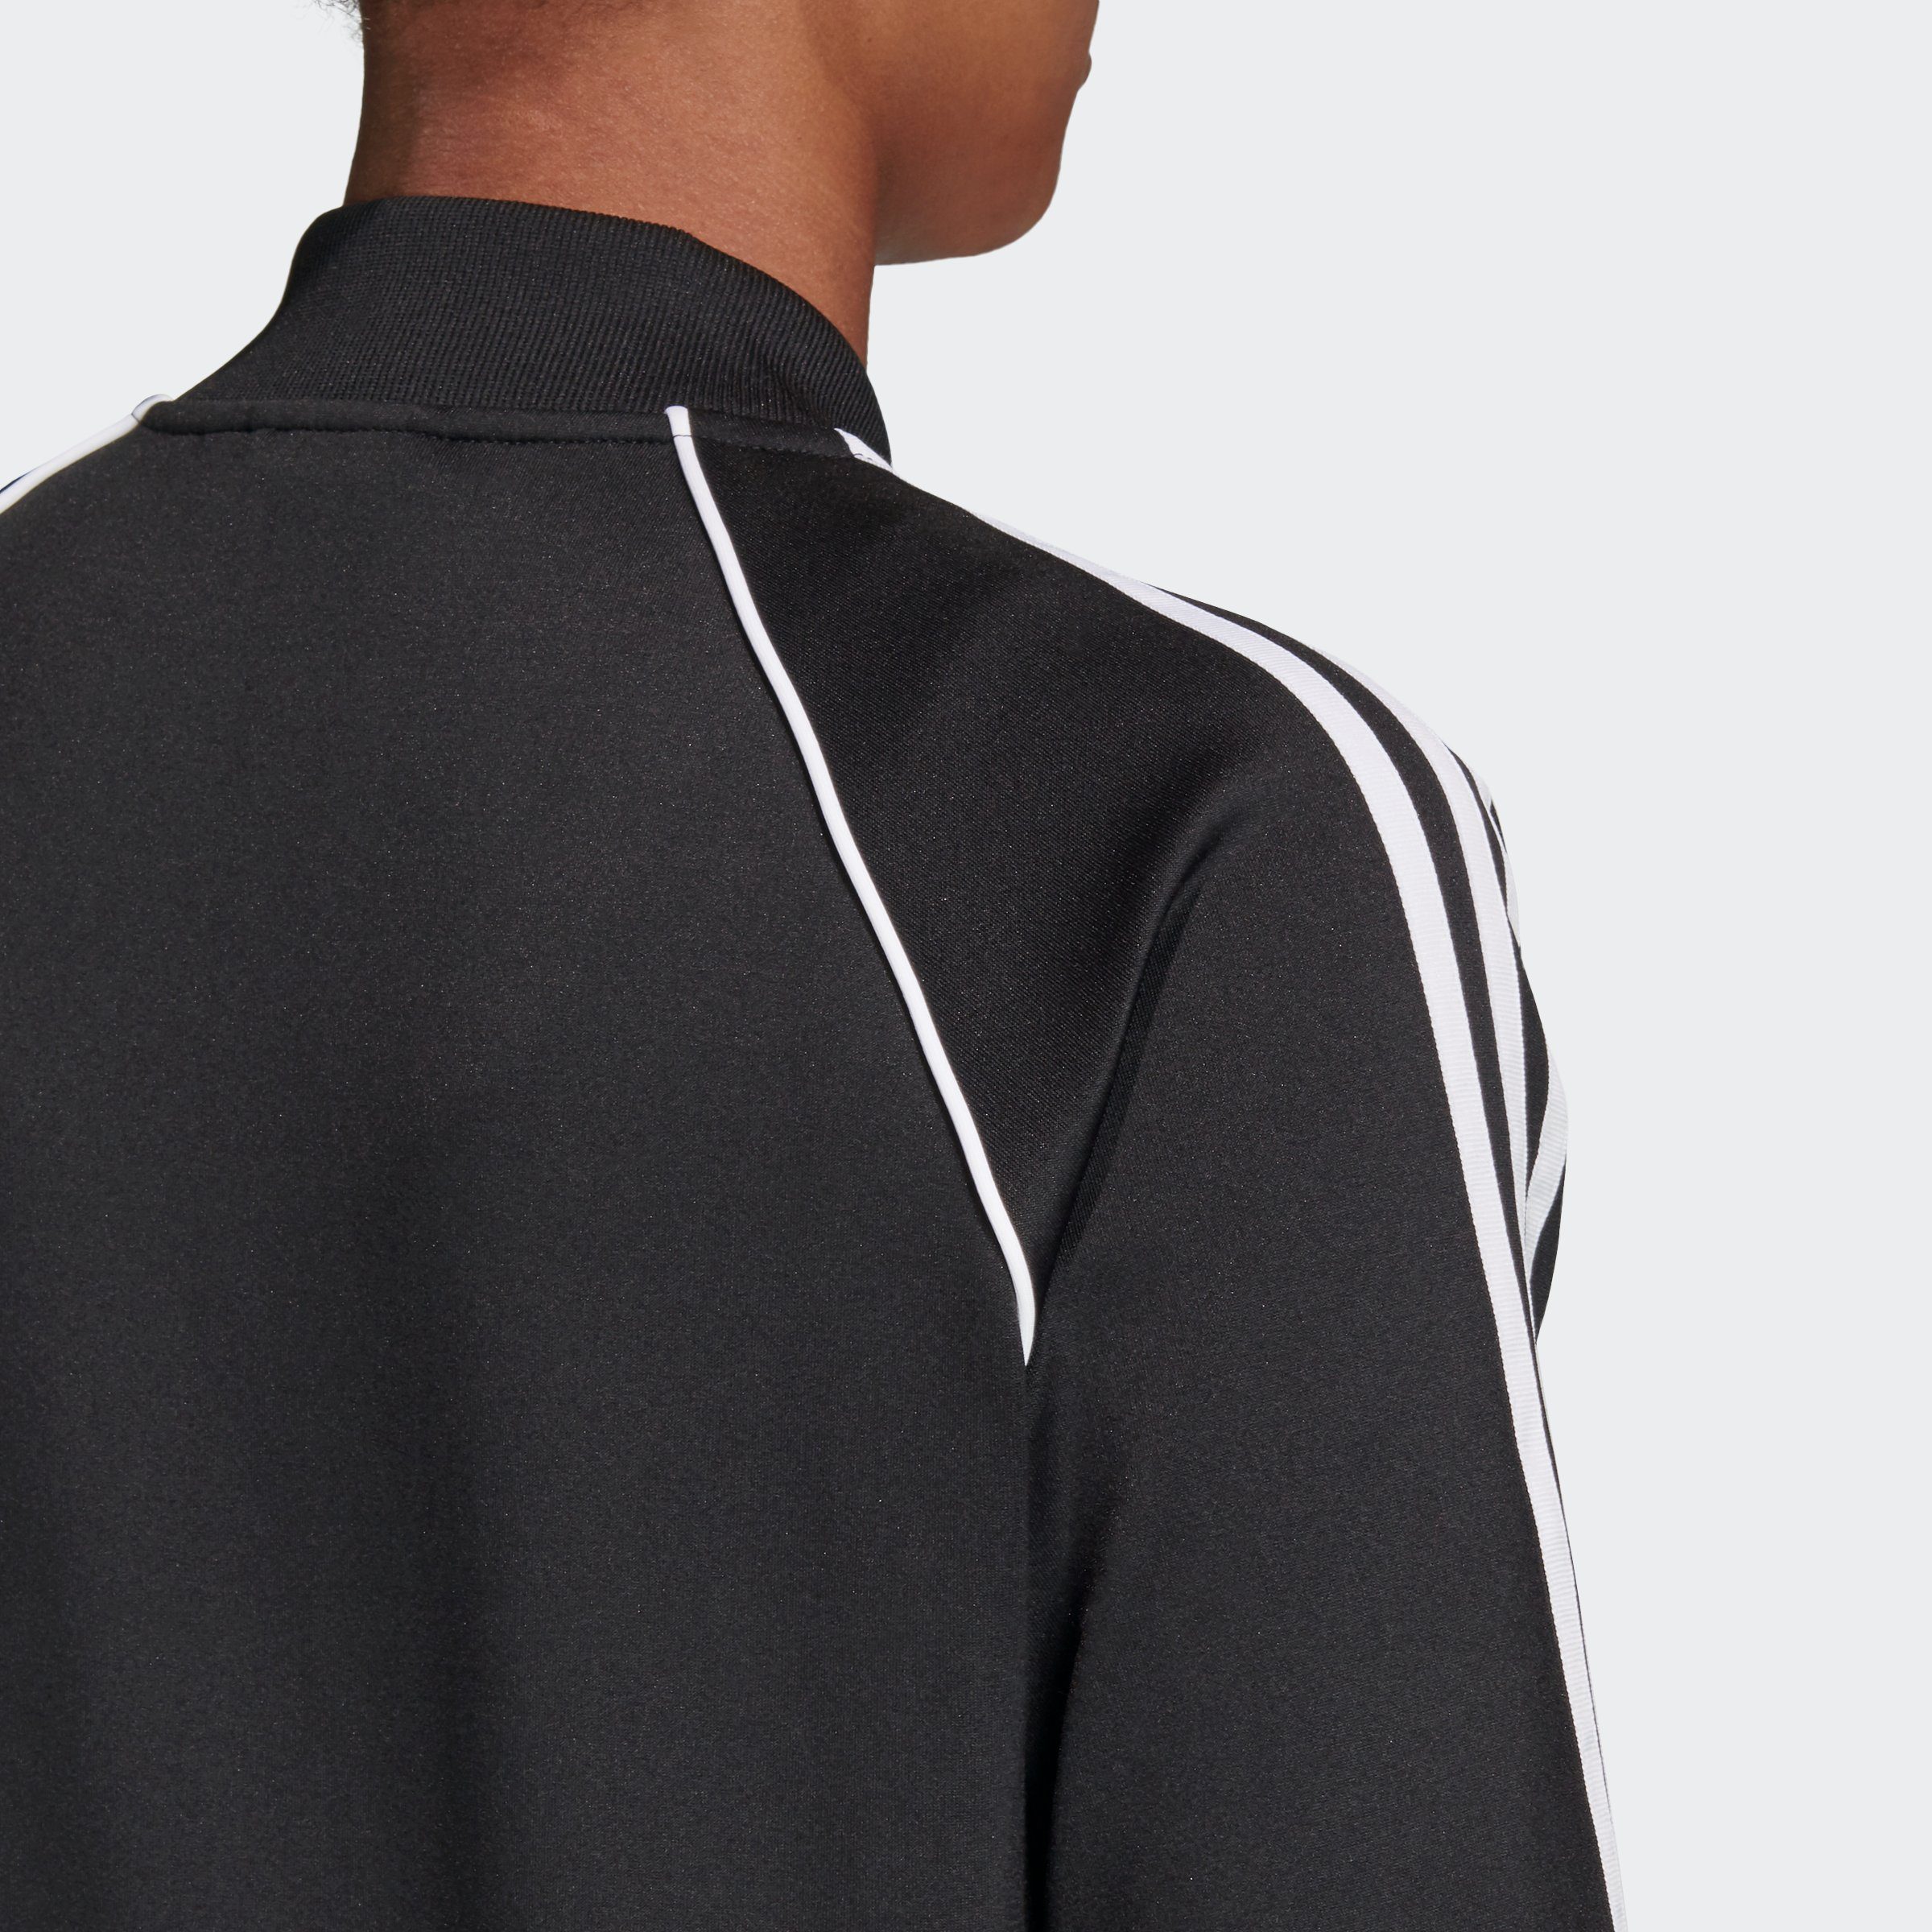 ORIGINALS BLACK/WHITE Trainingsjacke SST adidas Originals